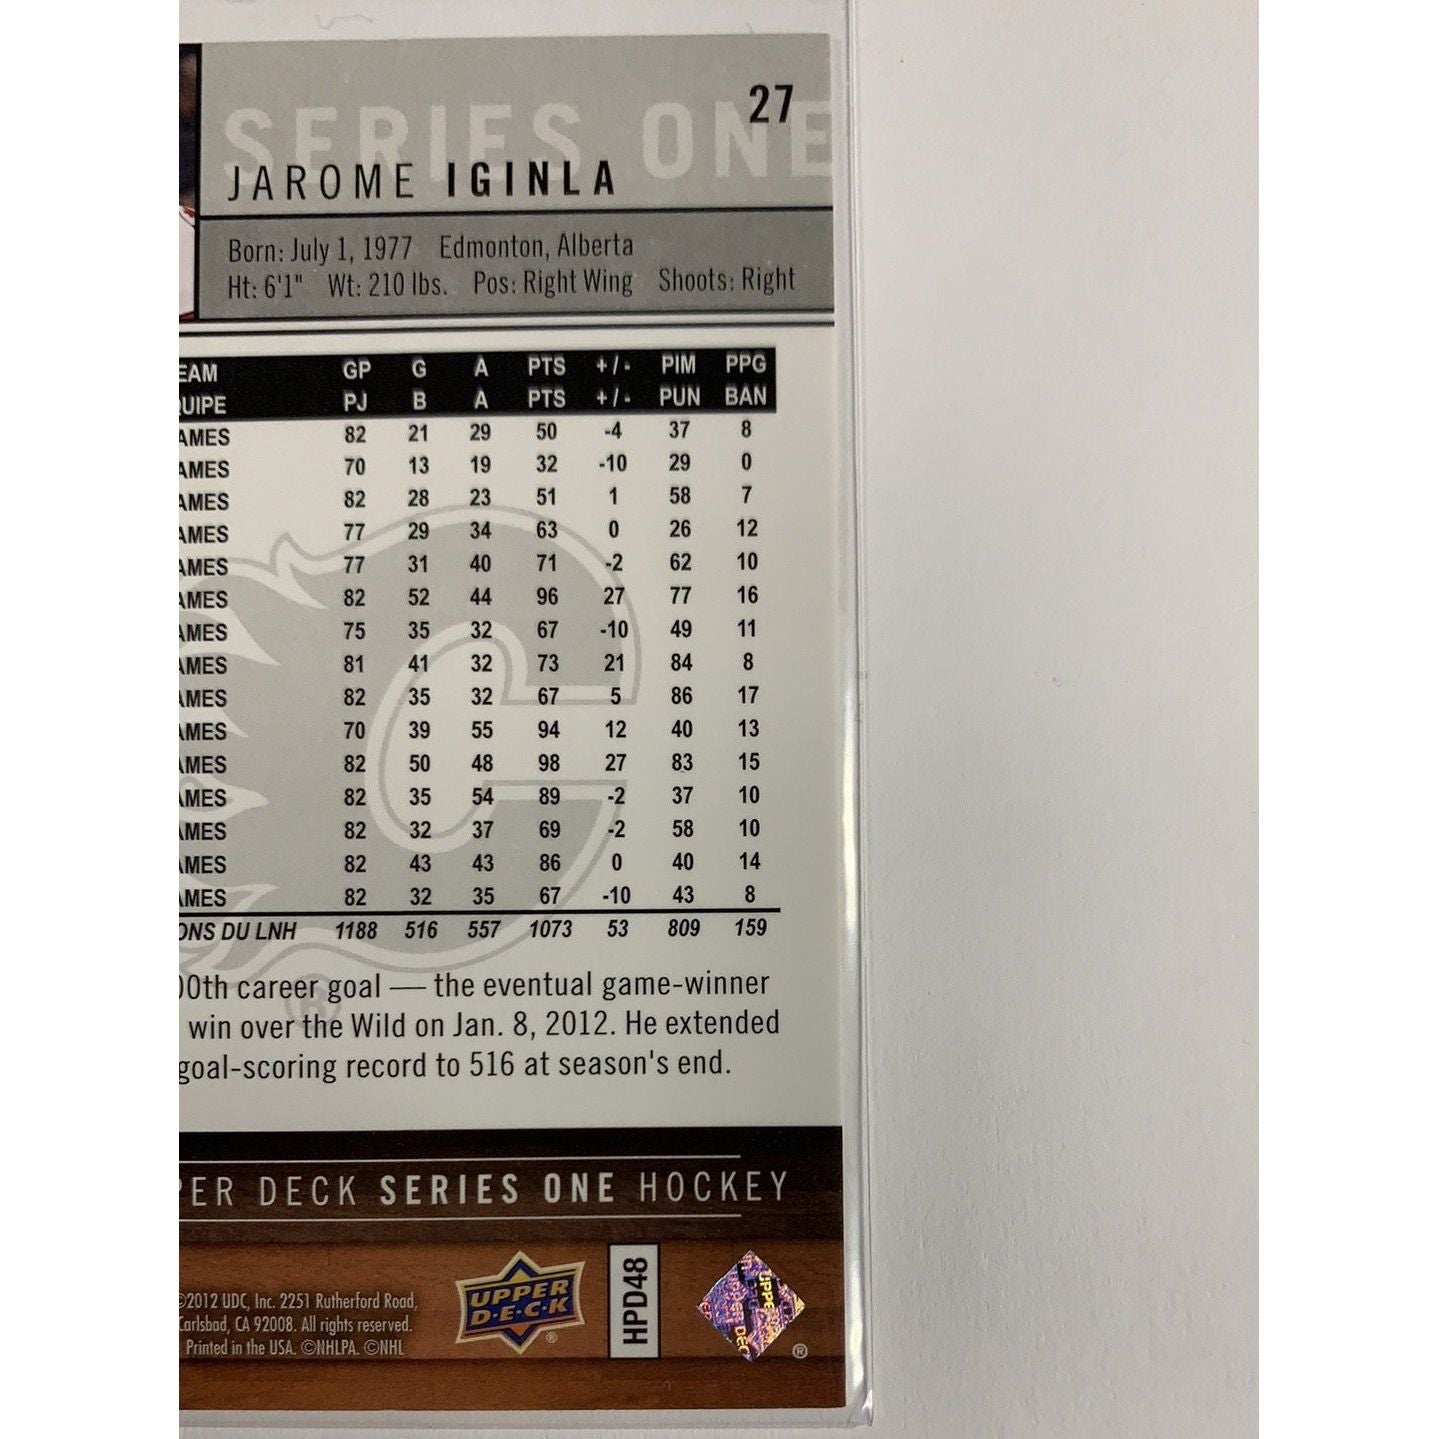  2012-13 Upper Deck Series 1 Jarome Iginla Base #27  Local Legends Cards & Collectibles